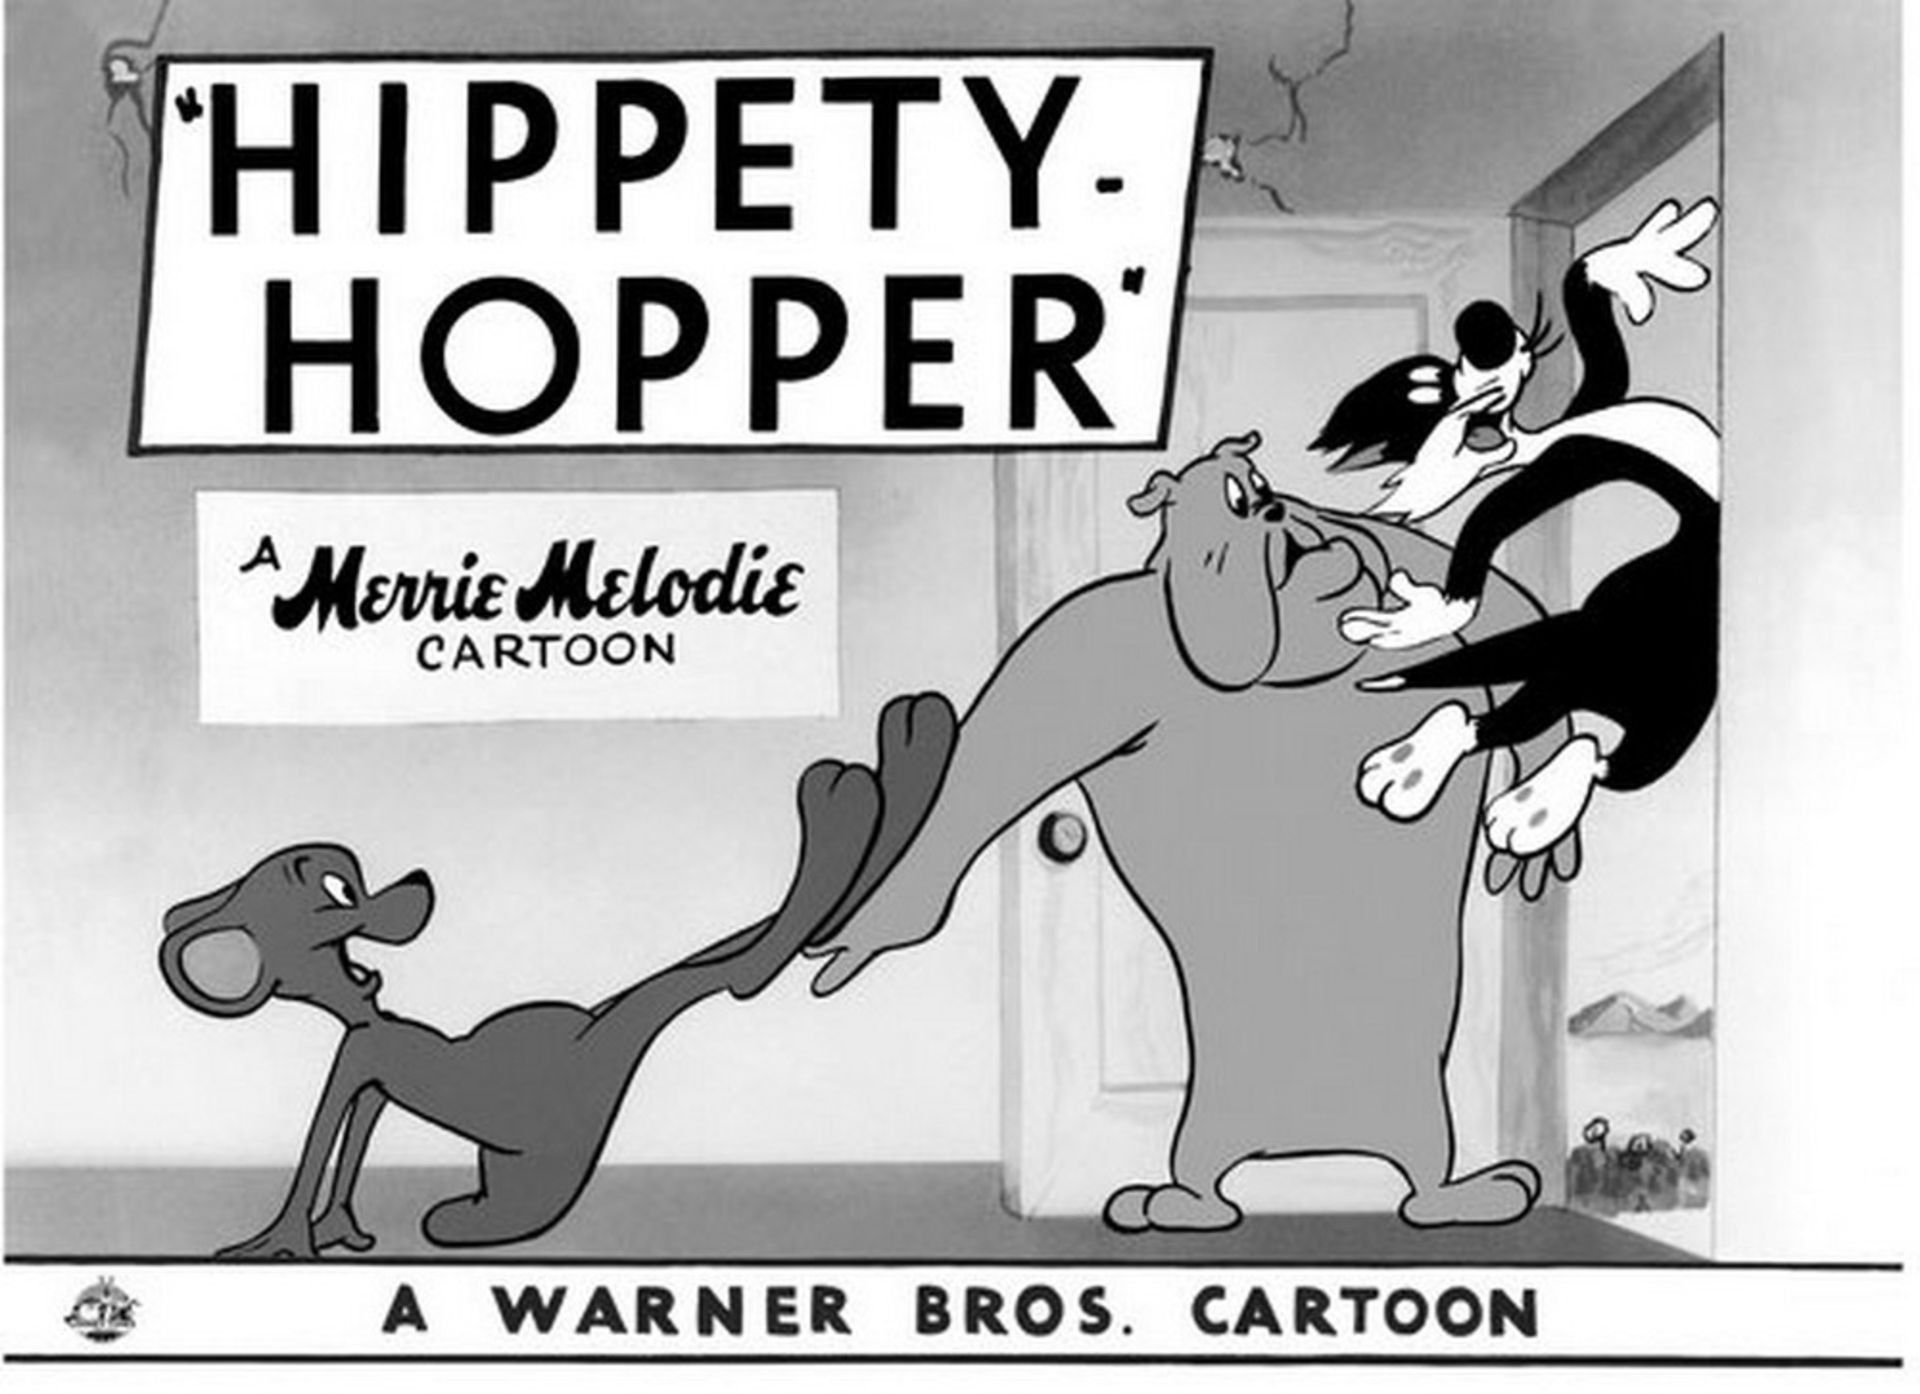 Warner Brothers Hologram Hippety Hopper - Image 2 of 2